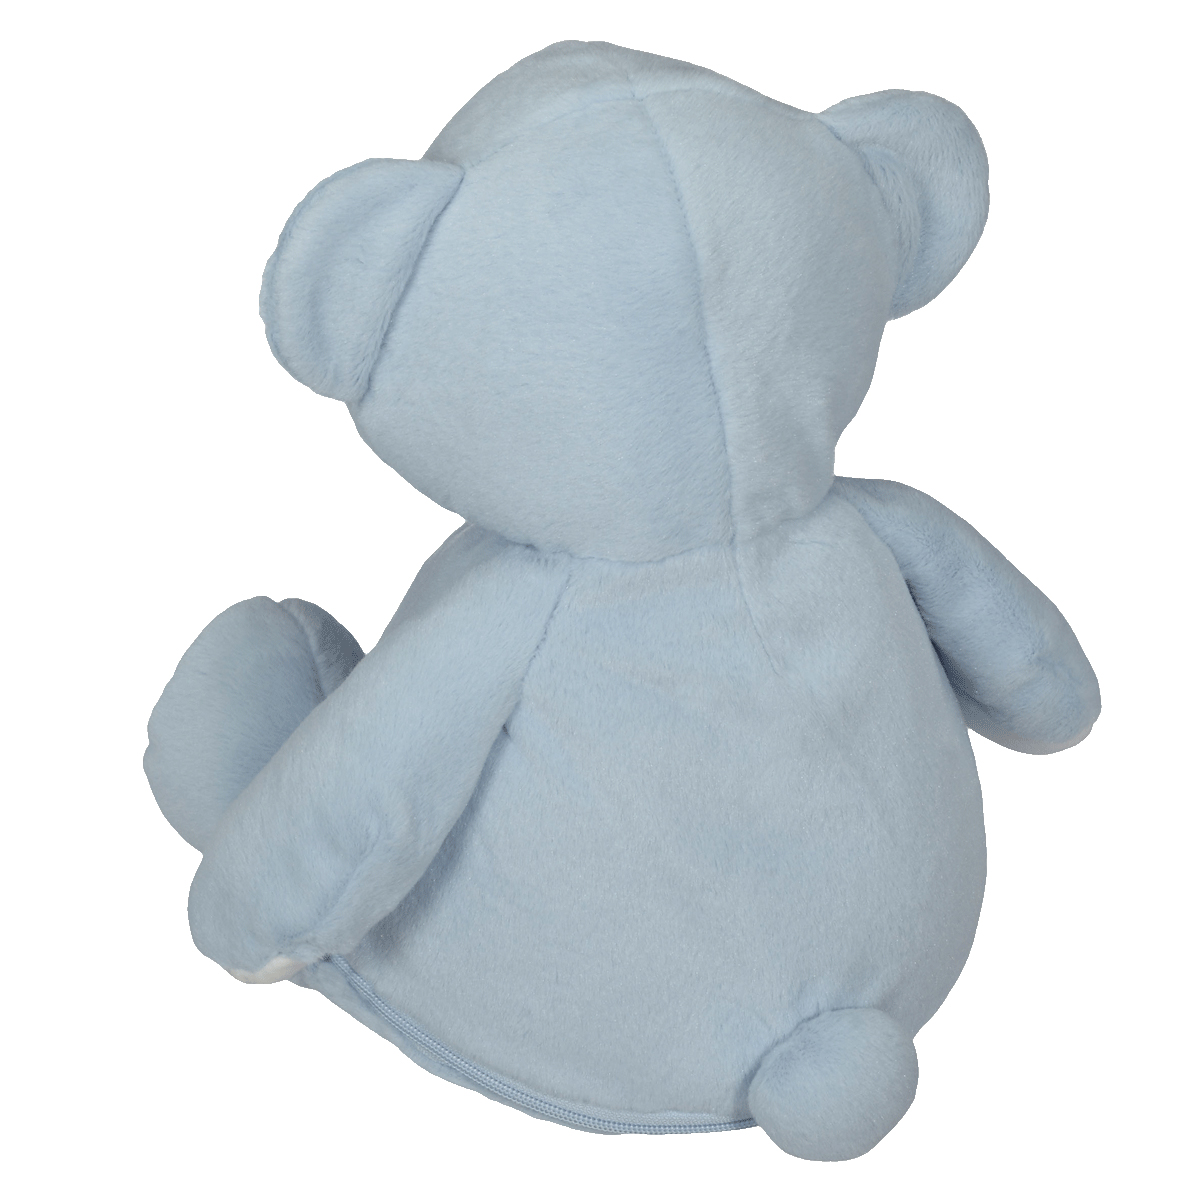 Embroidery Buddy Stuffed Animal - Mister Buddy Bear 20" - BLUE - NLA